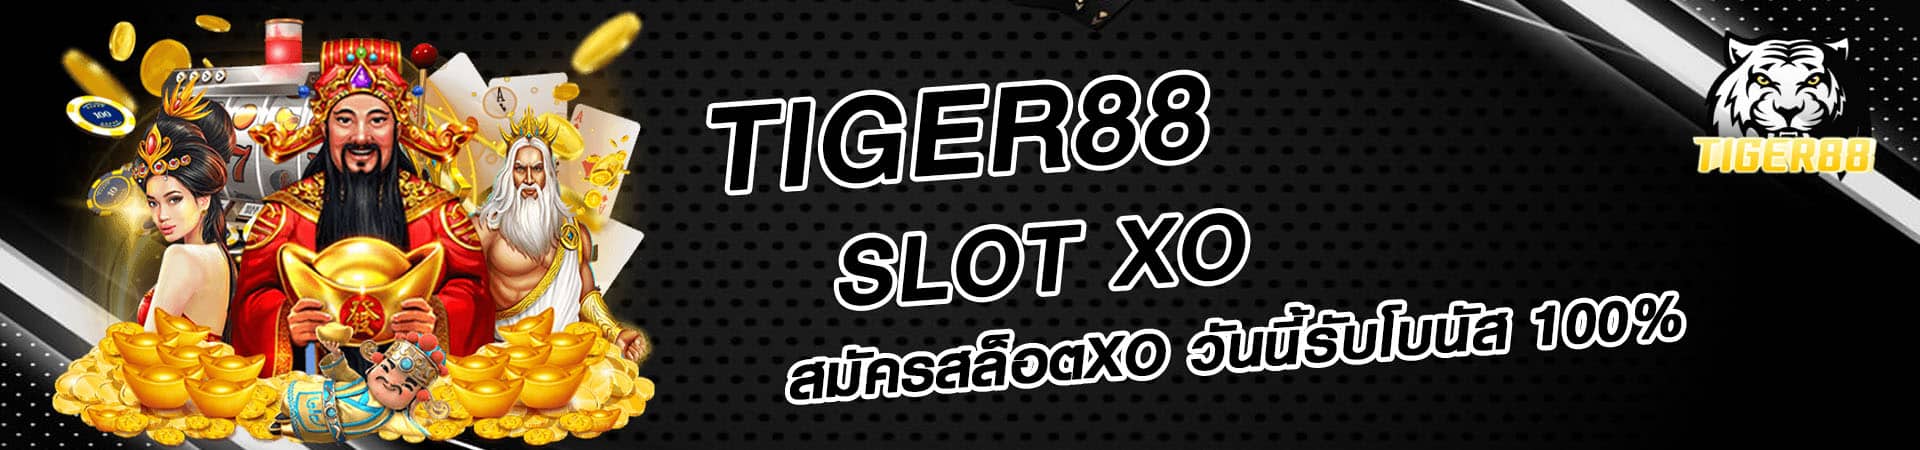 tiger88-banner1-SLOT-XO